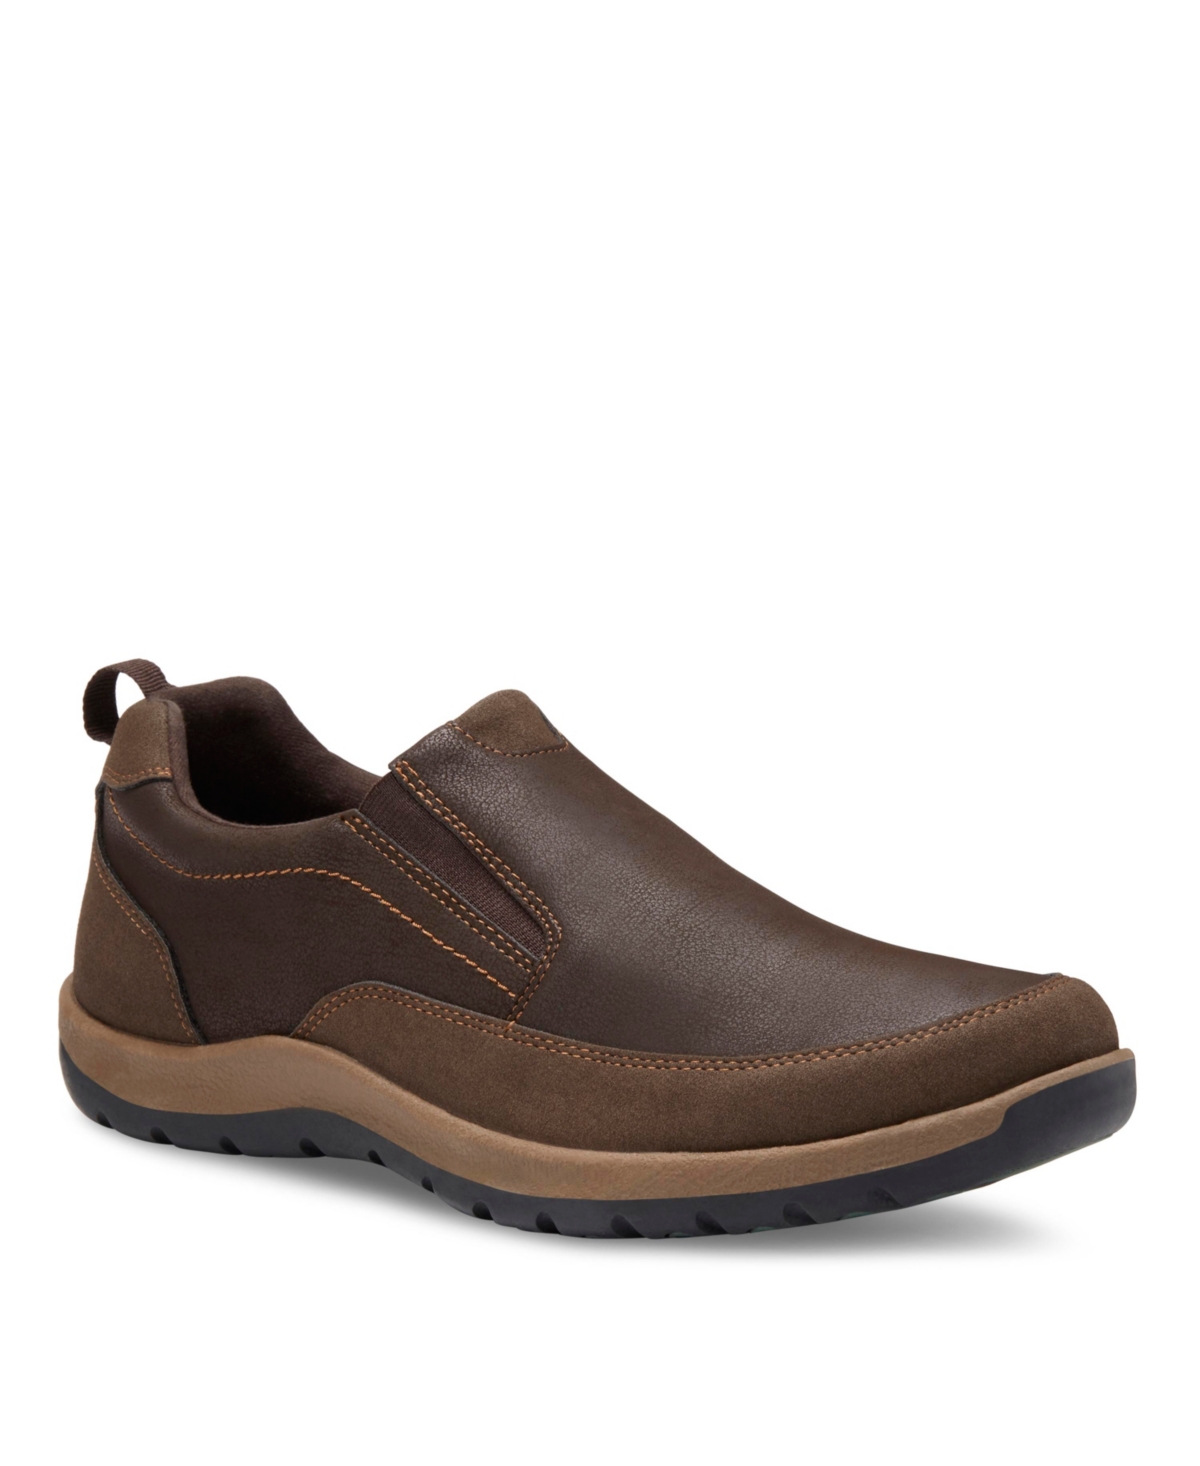 Men's Spencer Slip-on Shoes - Brown